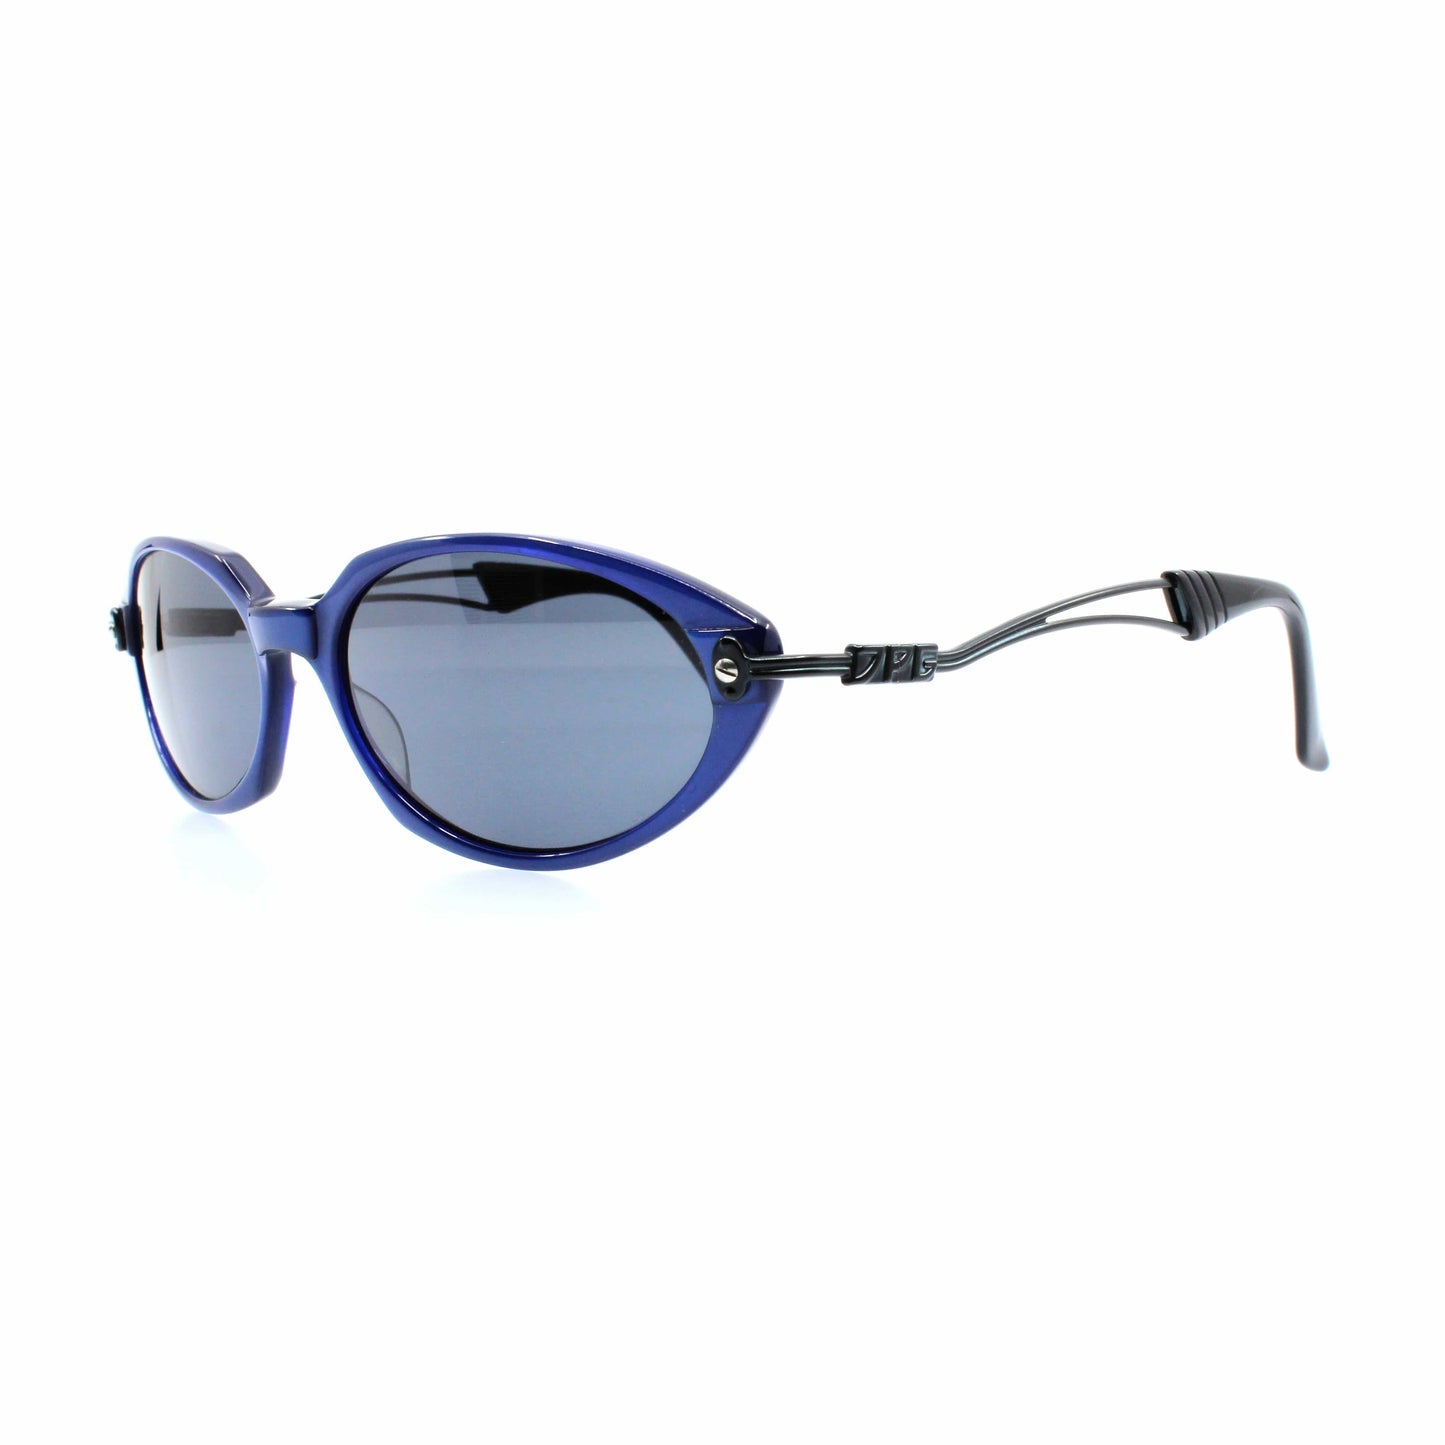 Blue Vintage Jean Paul Gaultier 58-7201 Sunglasses RSTKD Vintage